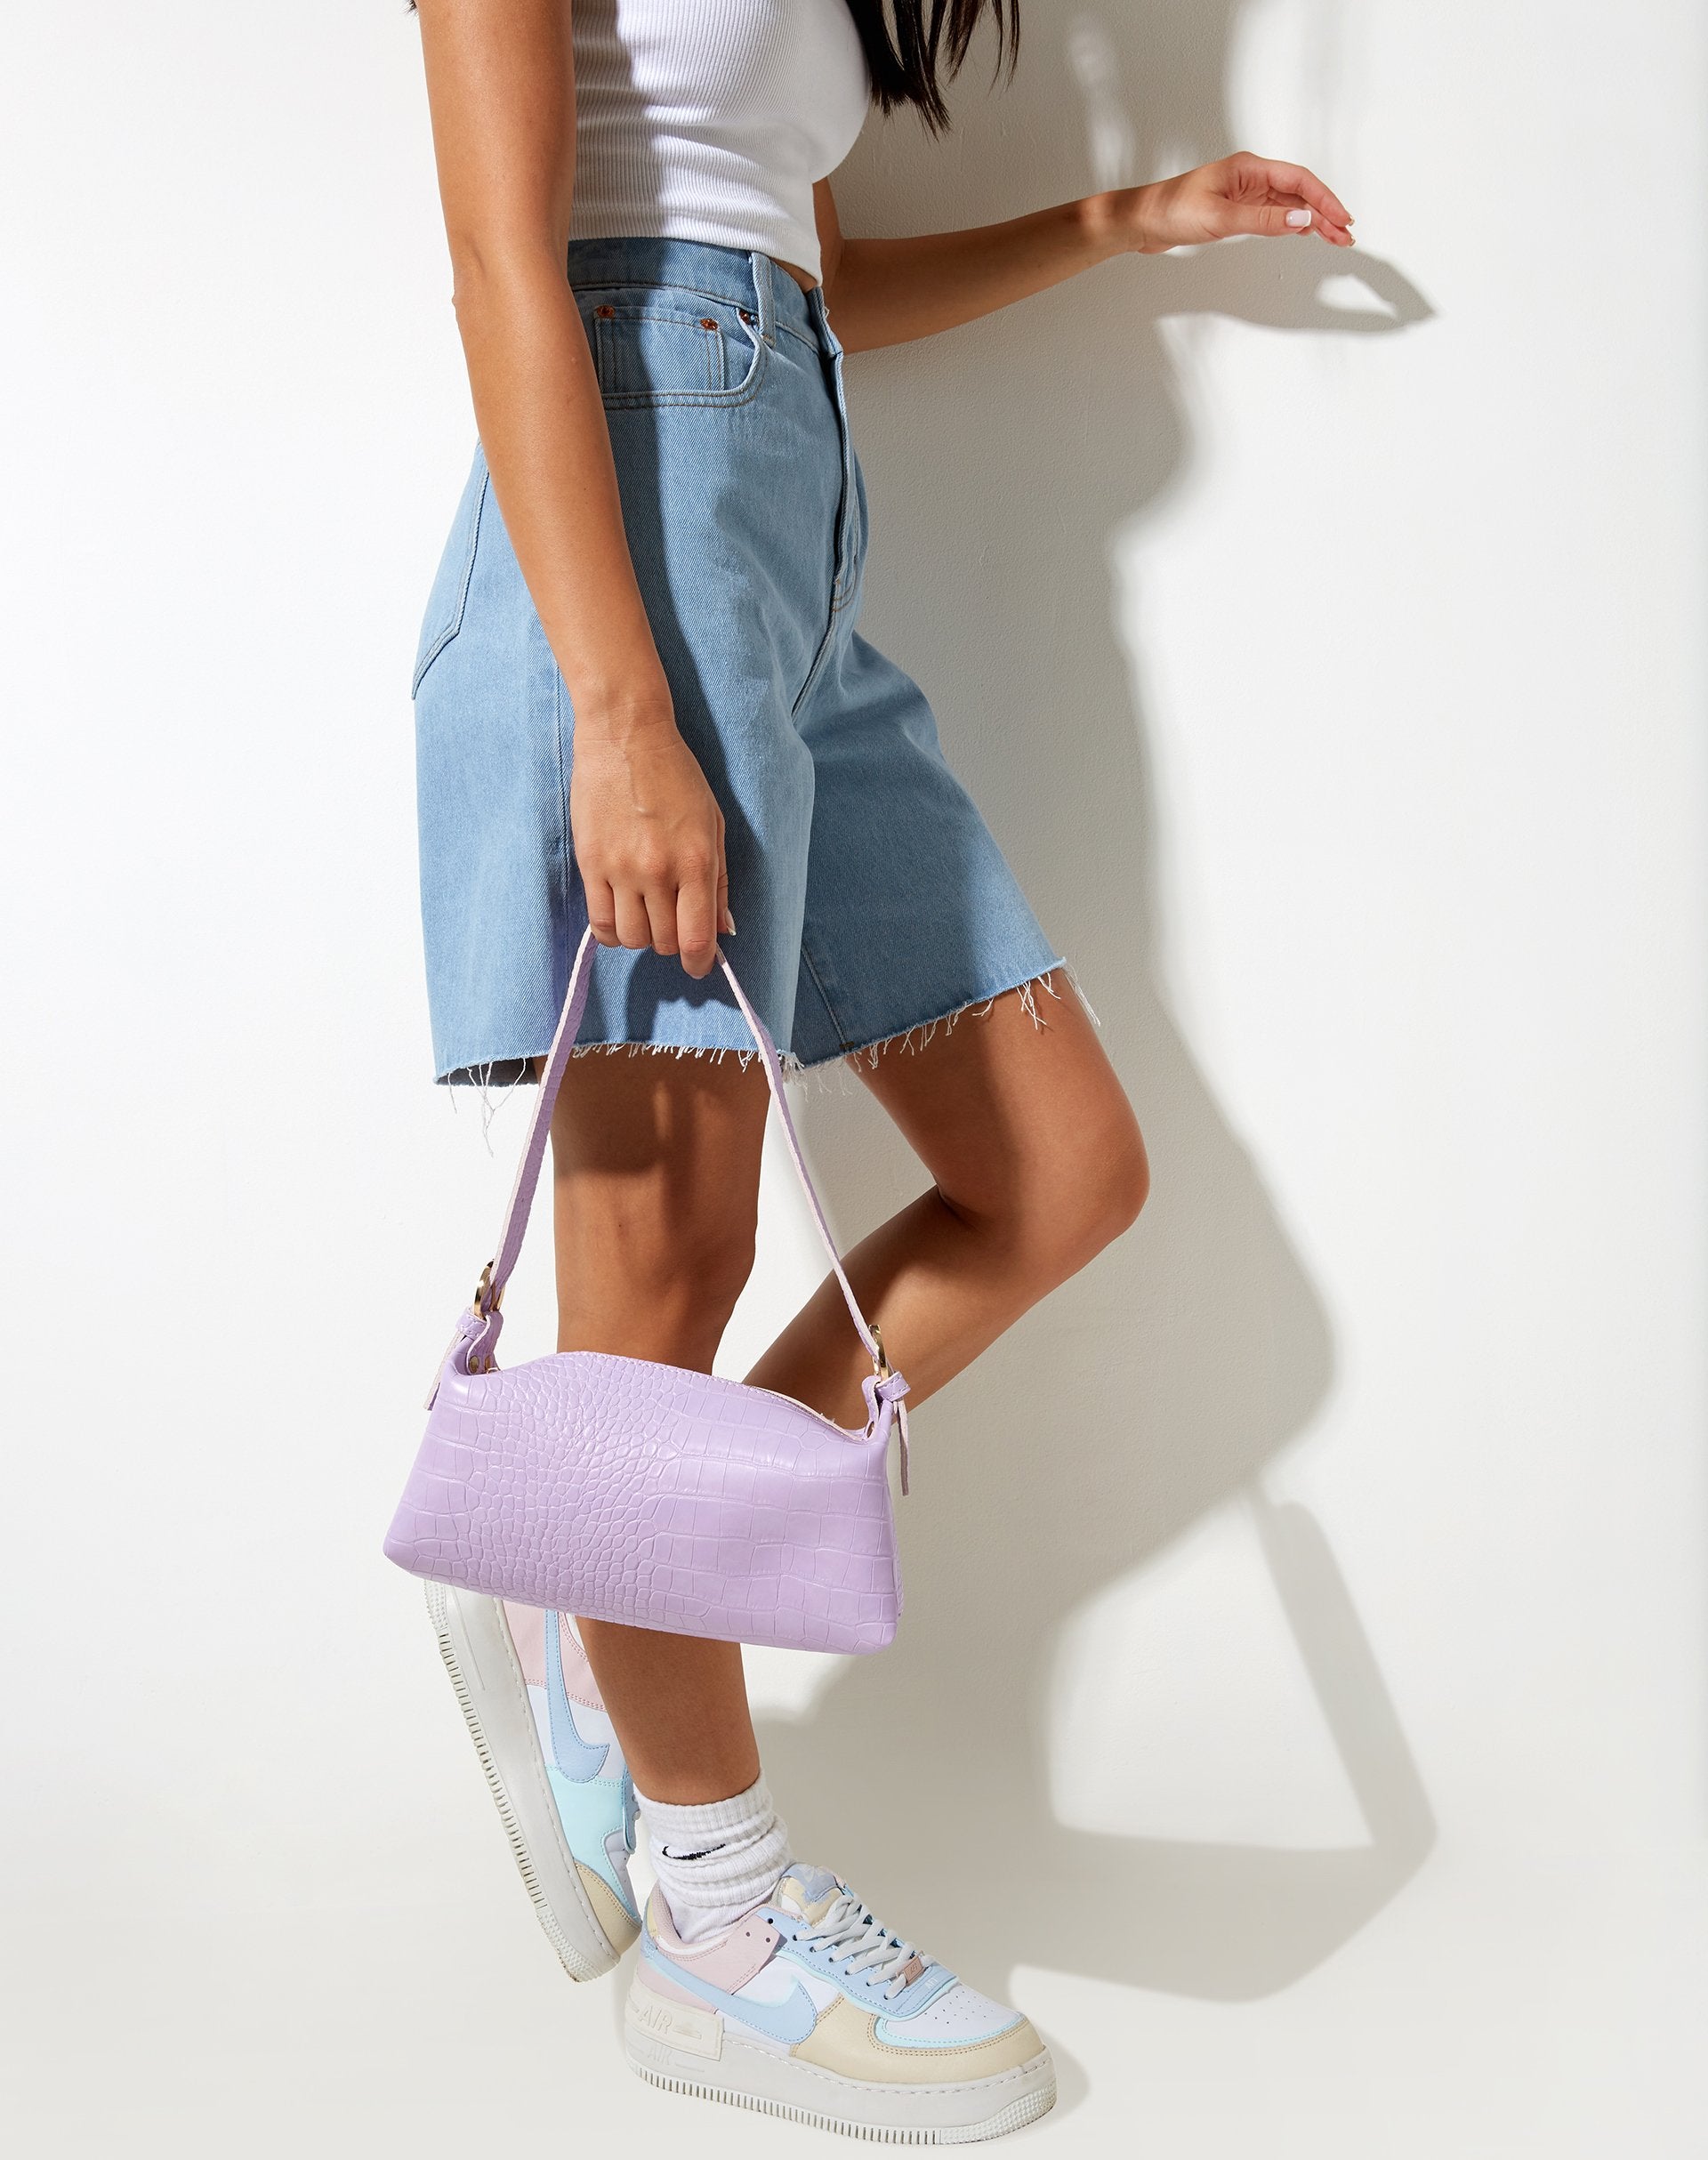 Image of Leila Shoulder Bag in Purple